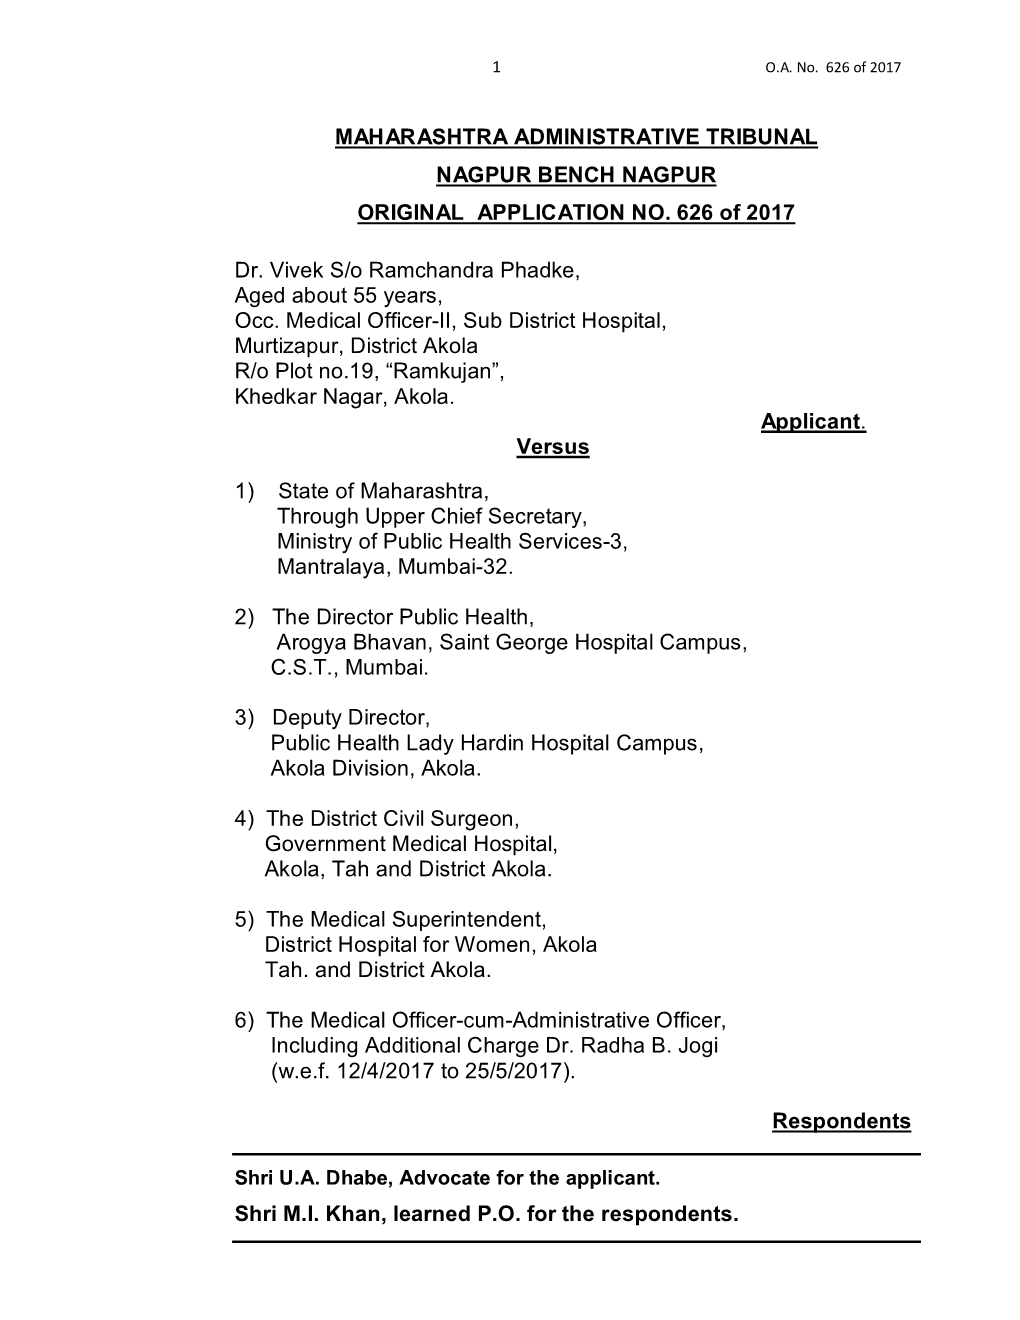 MAHARASHTRA ADMINISTRATIVE TRIBUNAL NAGPUR BENCH NAGPUR ORIGINAL APPLICATION NO. 626 of 2017 Dr. Vivek S/O Ramchandra Phadke